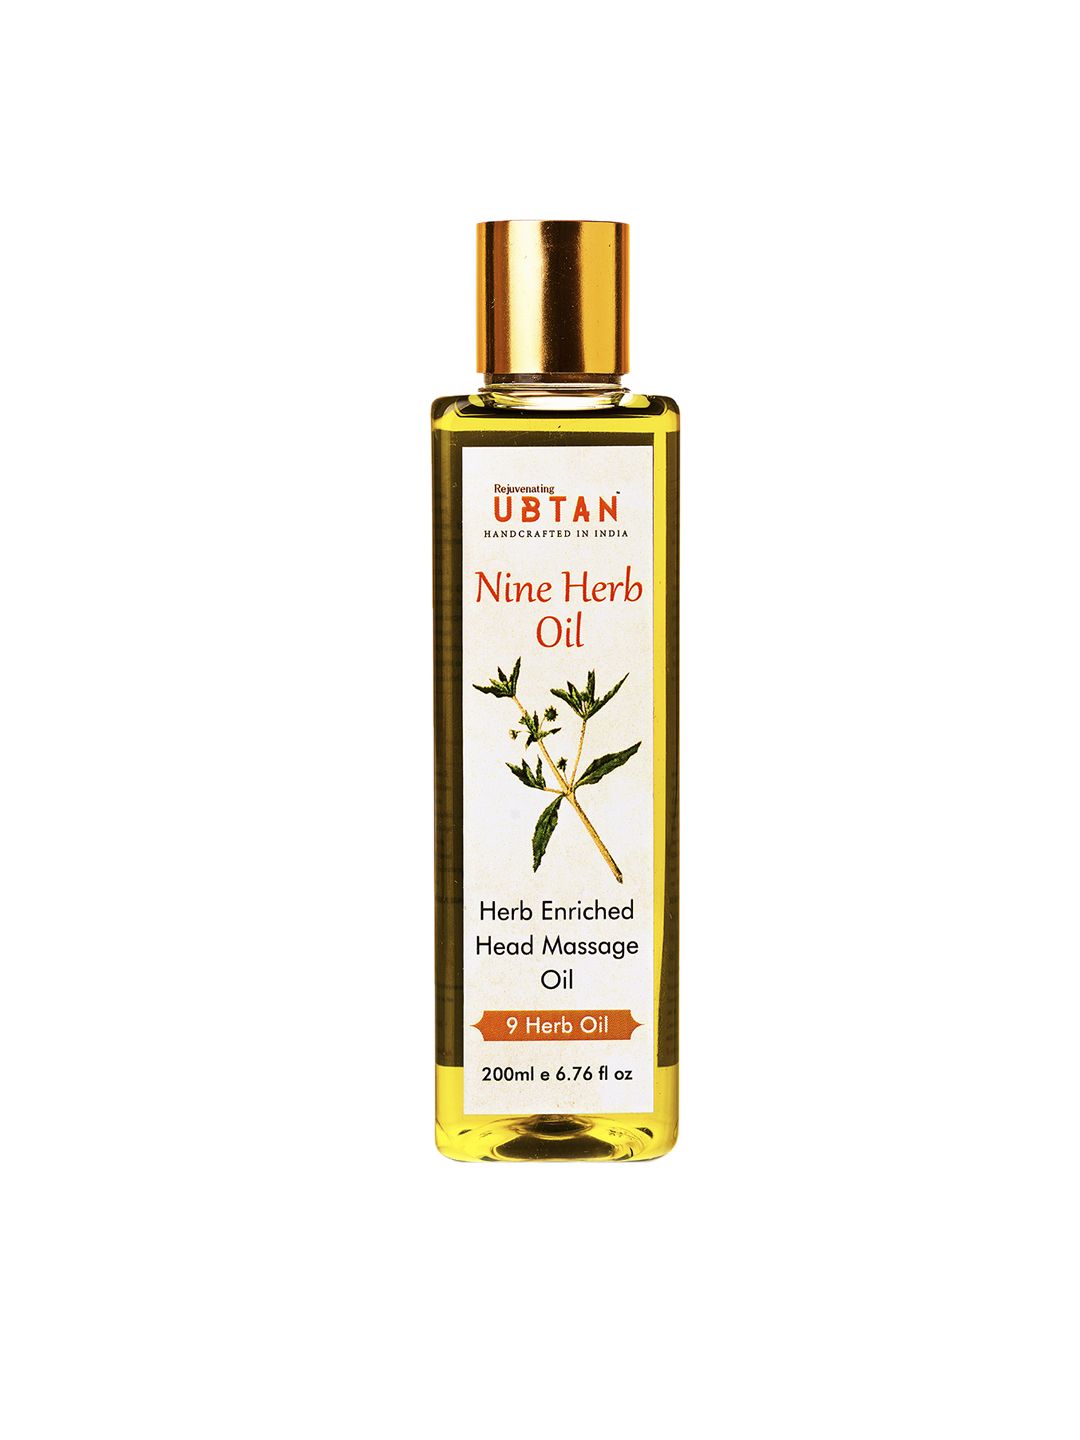 Rejuvenating UBTAN 9 Herb Enriched Head Massage Oil 200ml Price in India